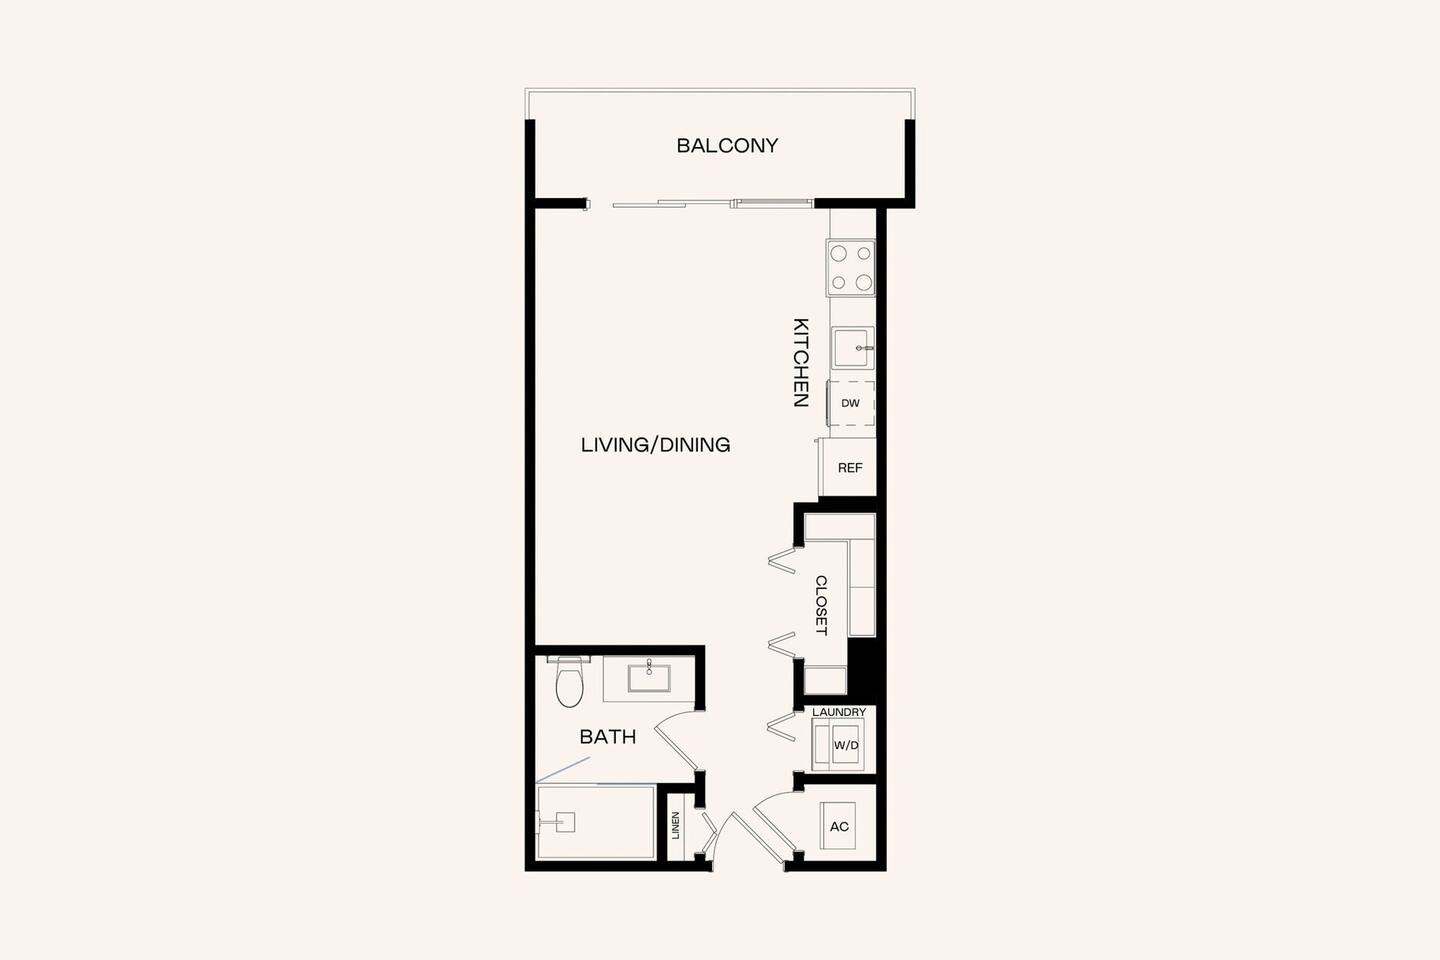 Floorplan diagram for J1, showing Studio